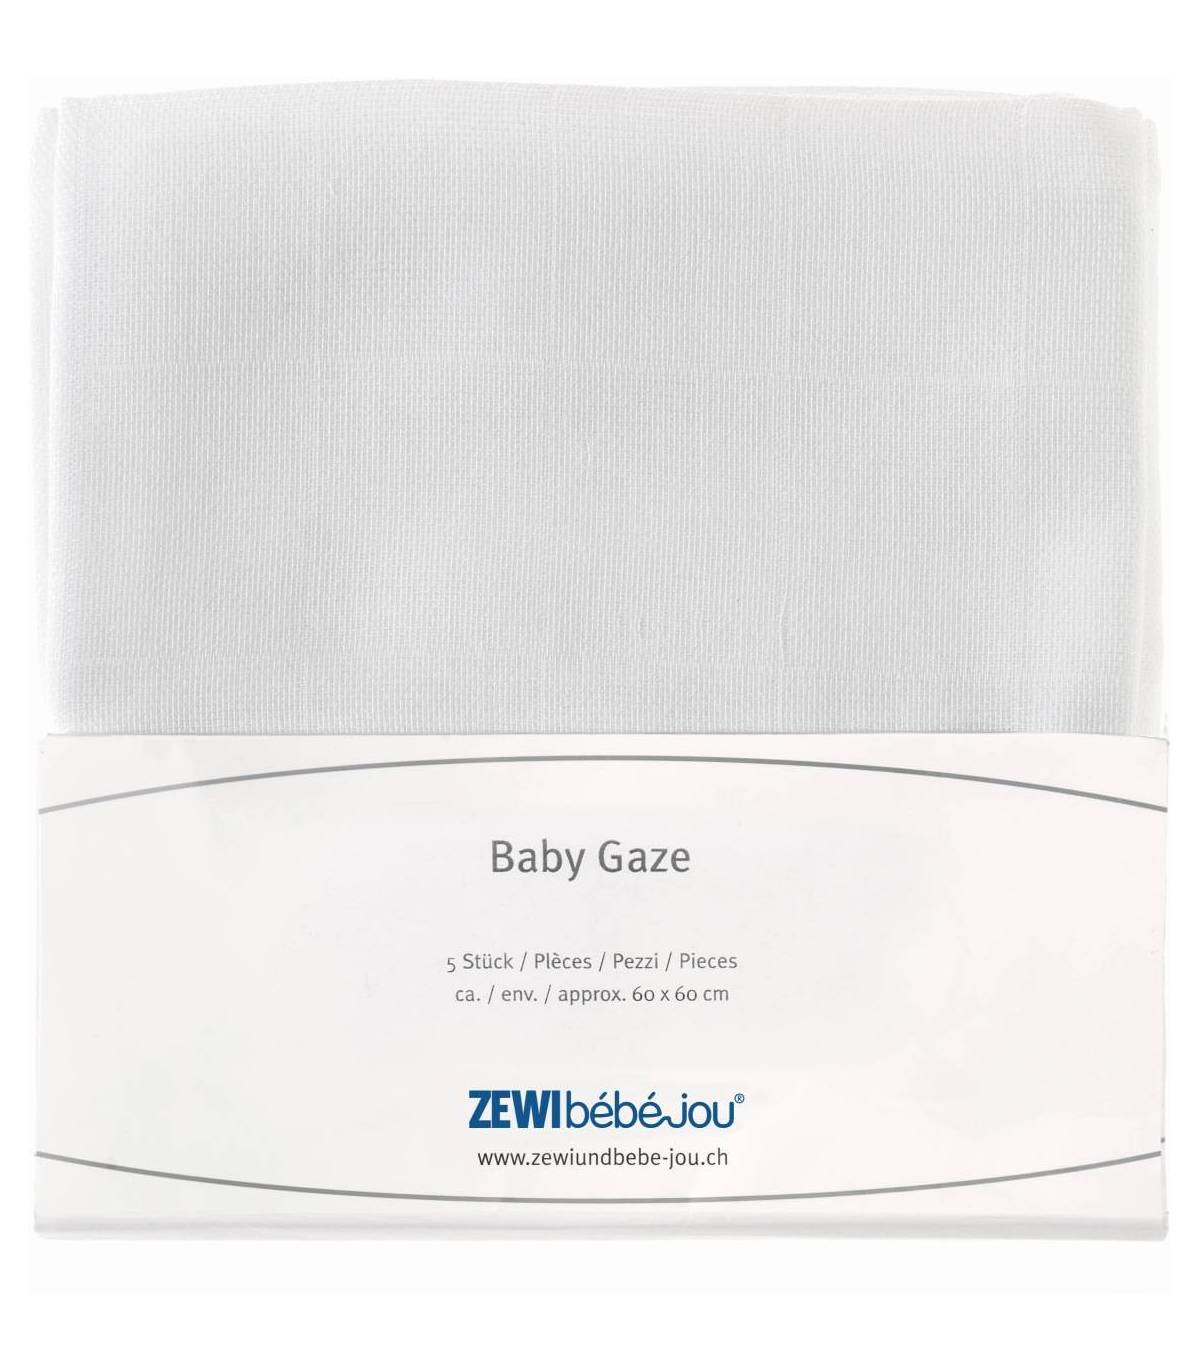 Zewi BÃ©bÃ©-Jou Baby Gaze 60x60 5er Pack